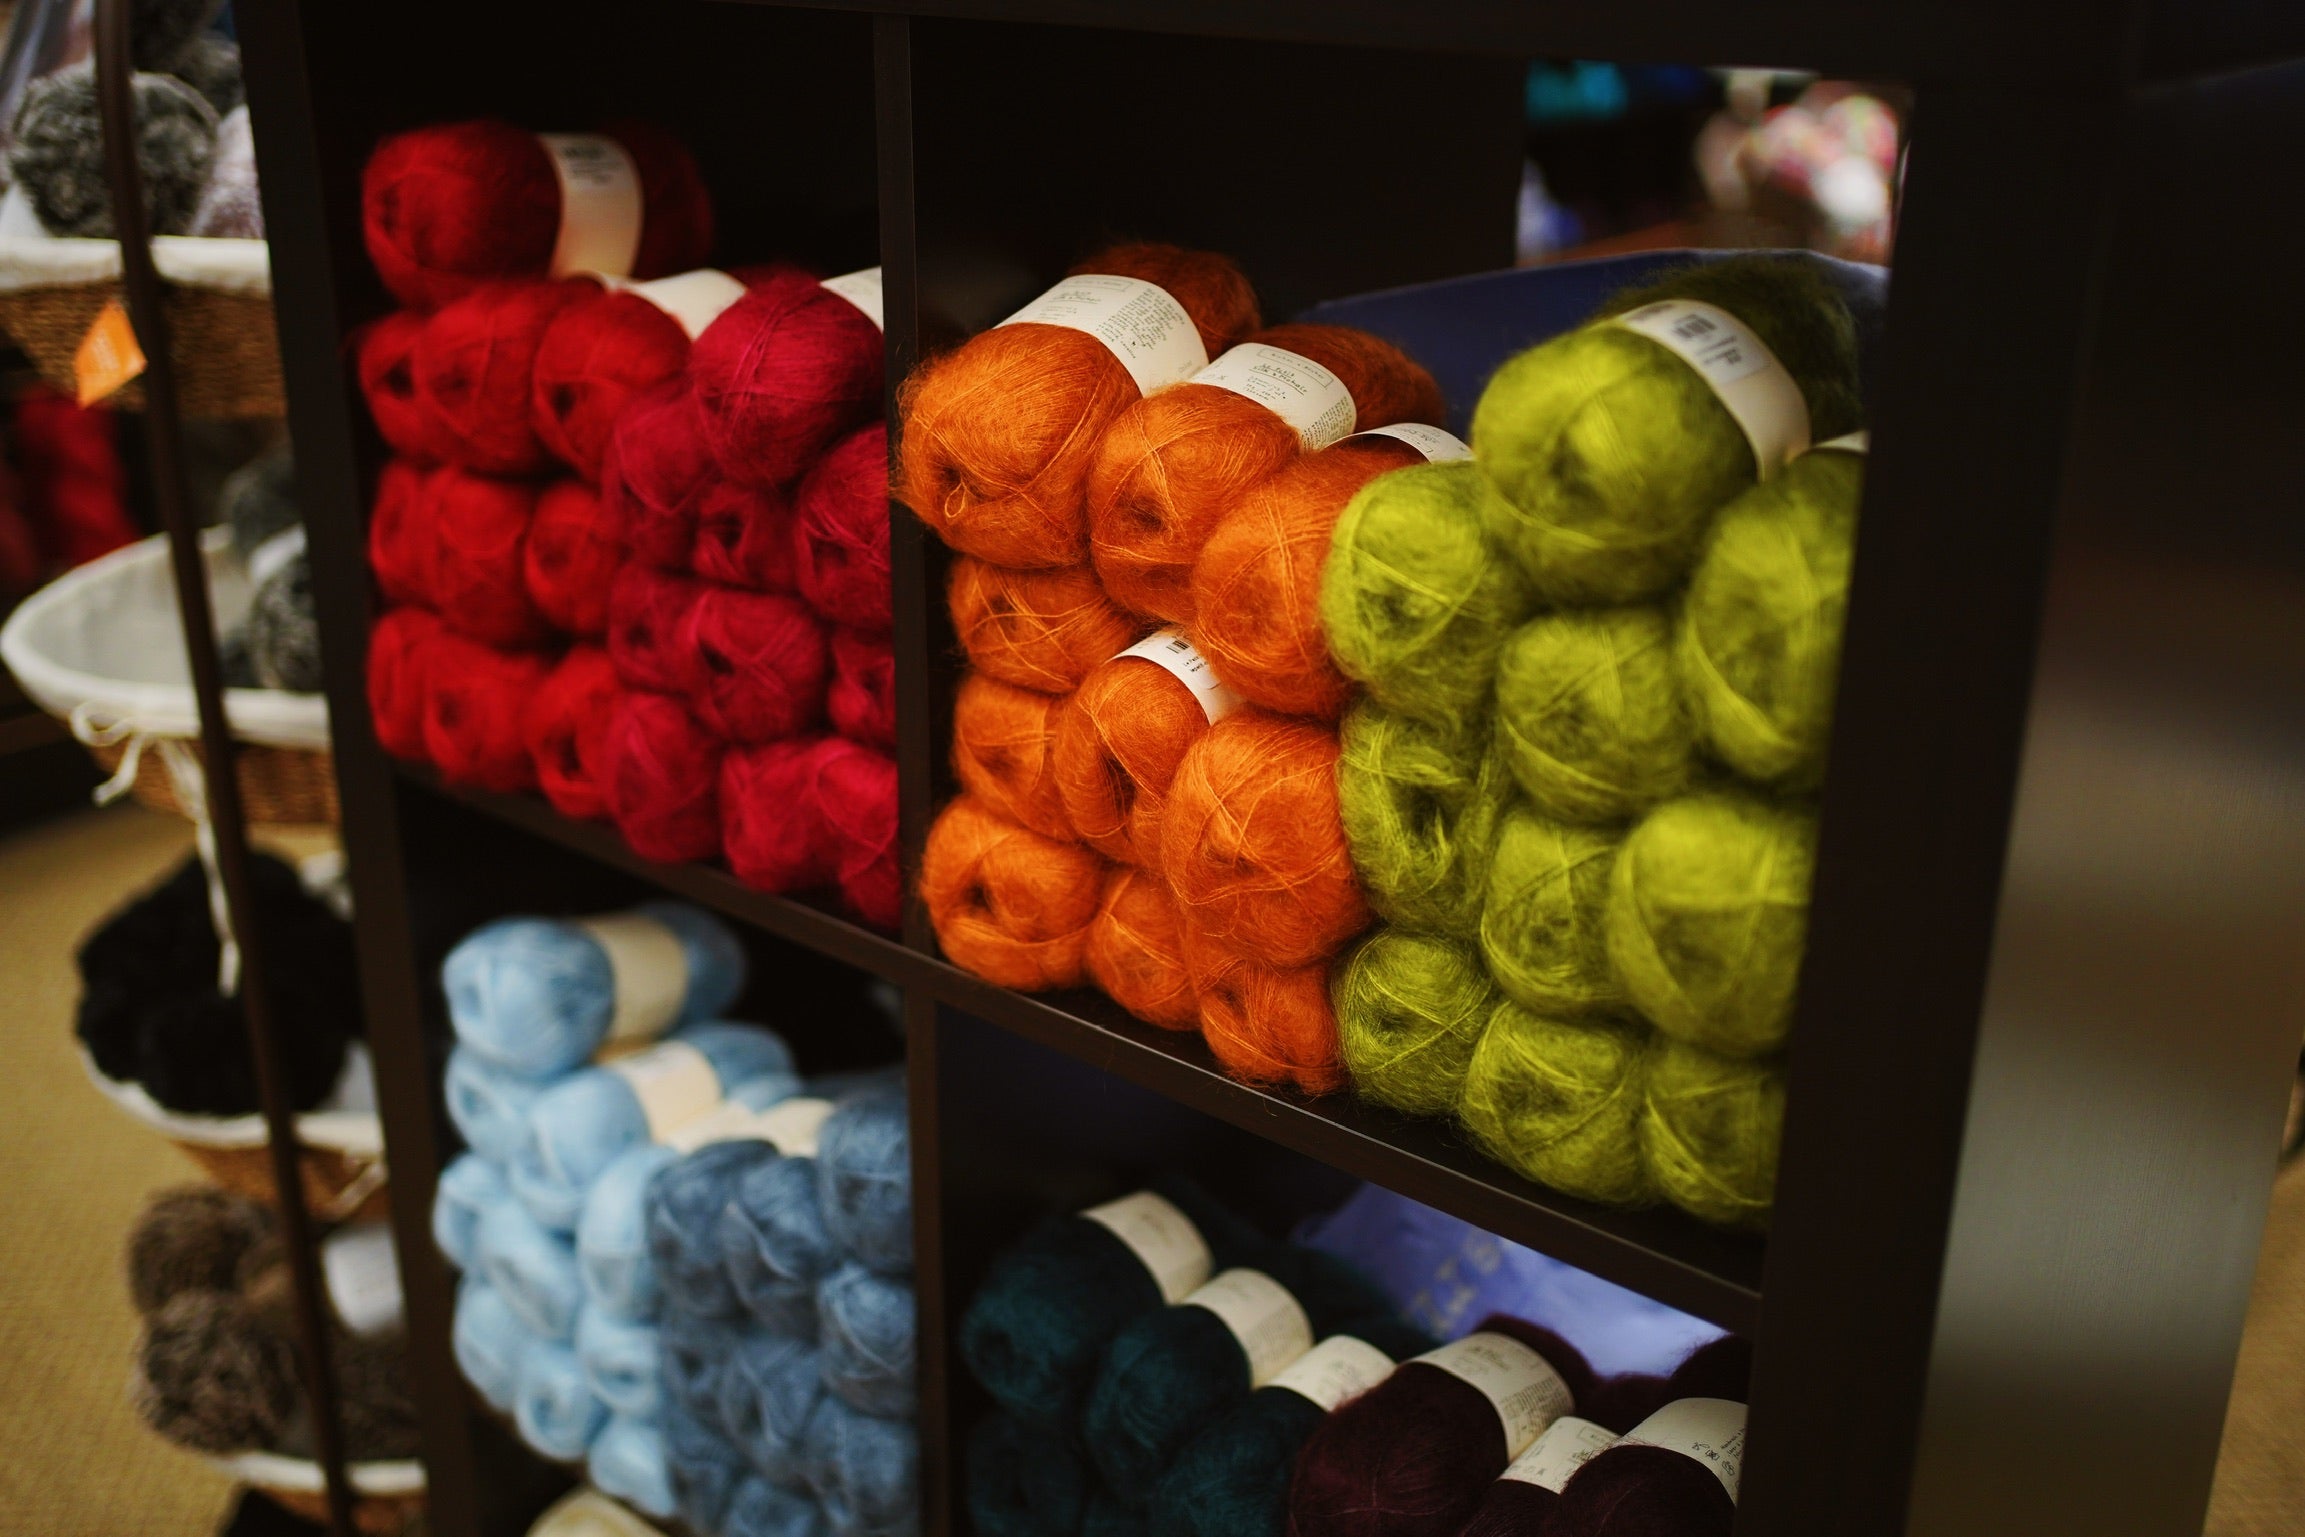 Biches & Buches Le Petit Silk & Mohair - The Little Yarn Store